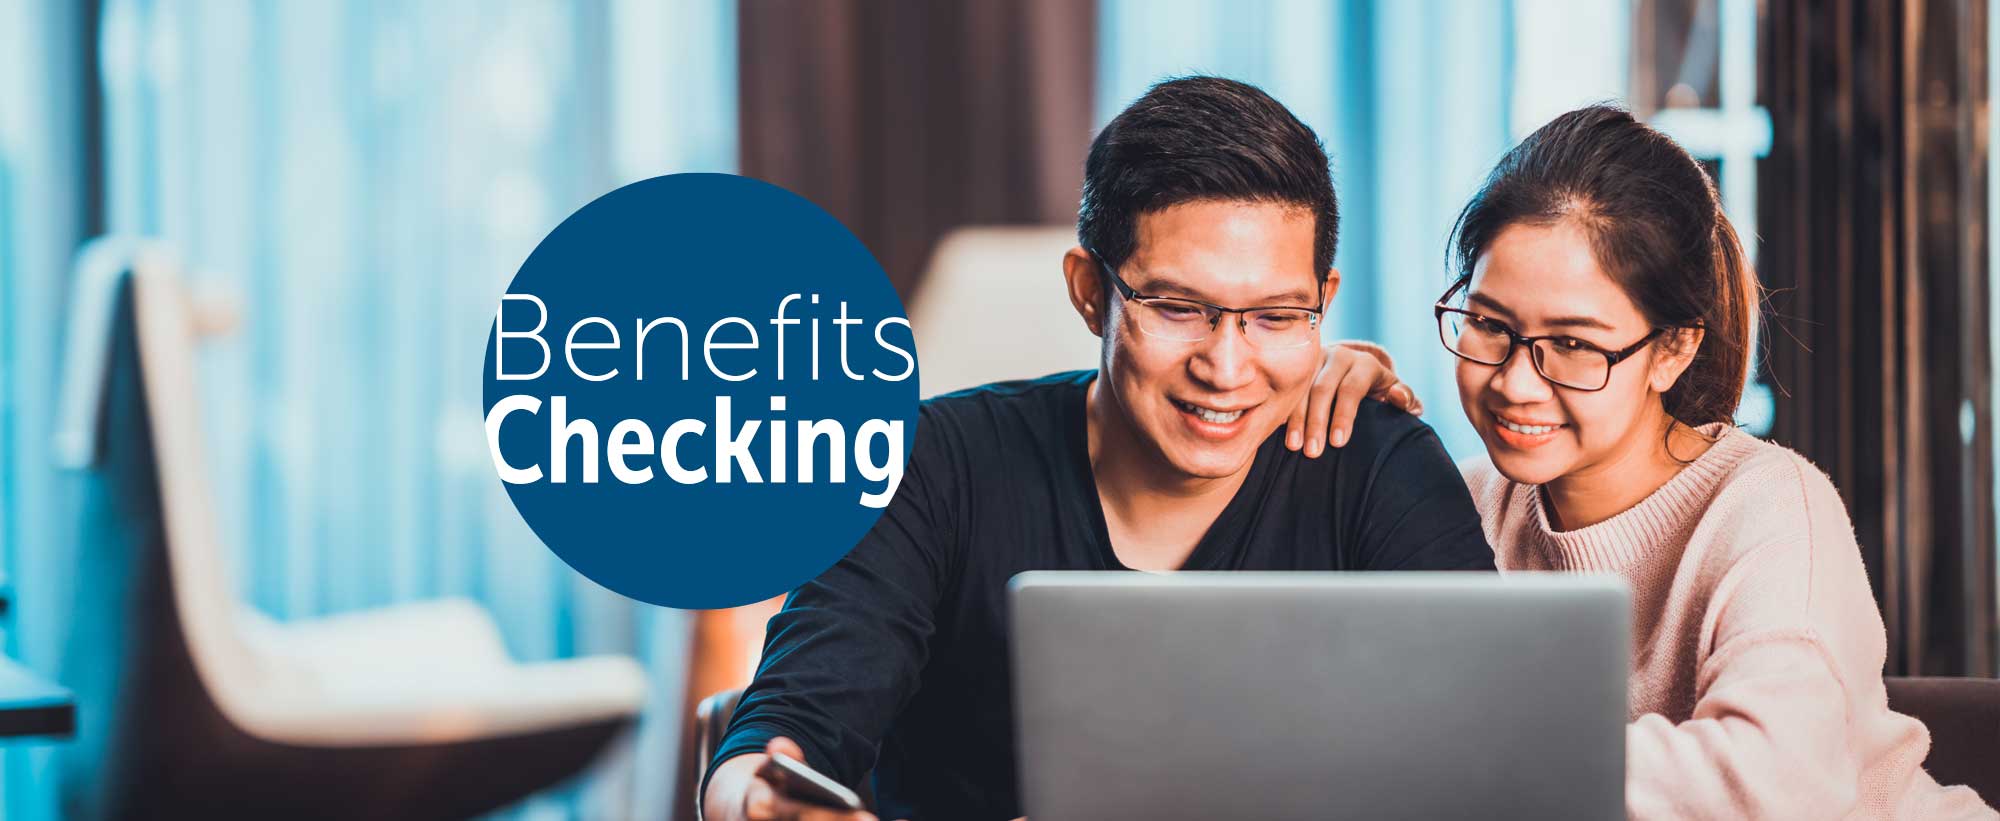 Benefits Checking